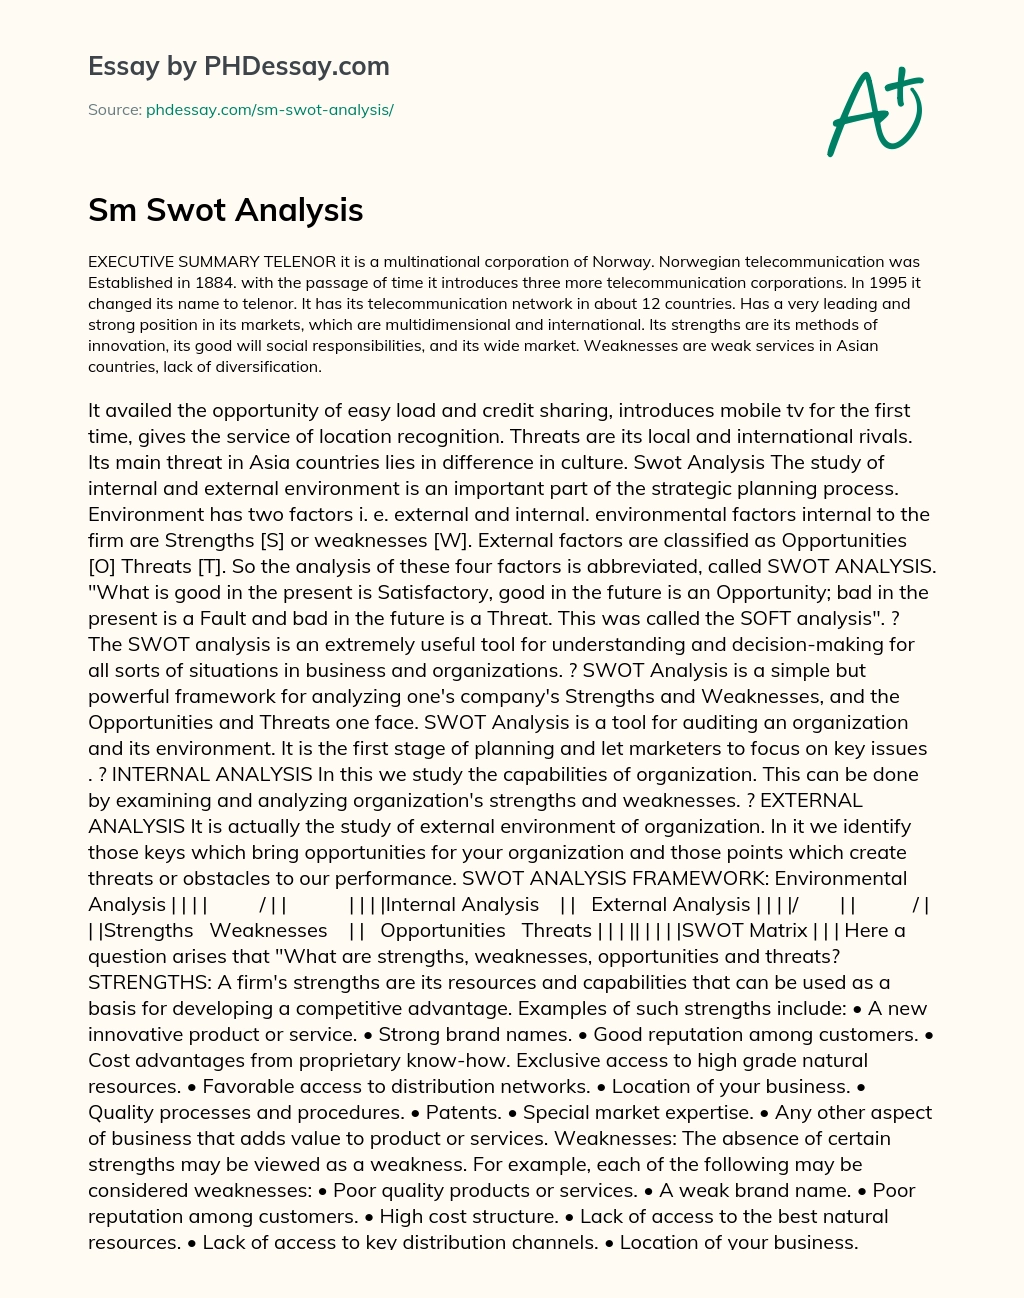 Sm Swot Analysis essay